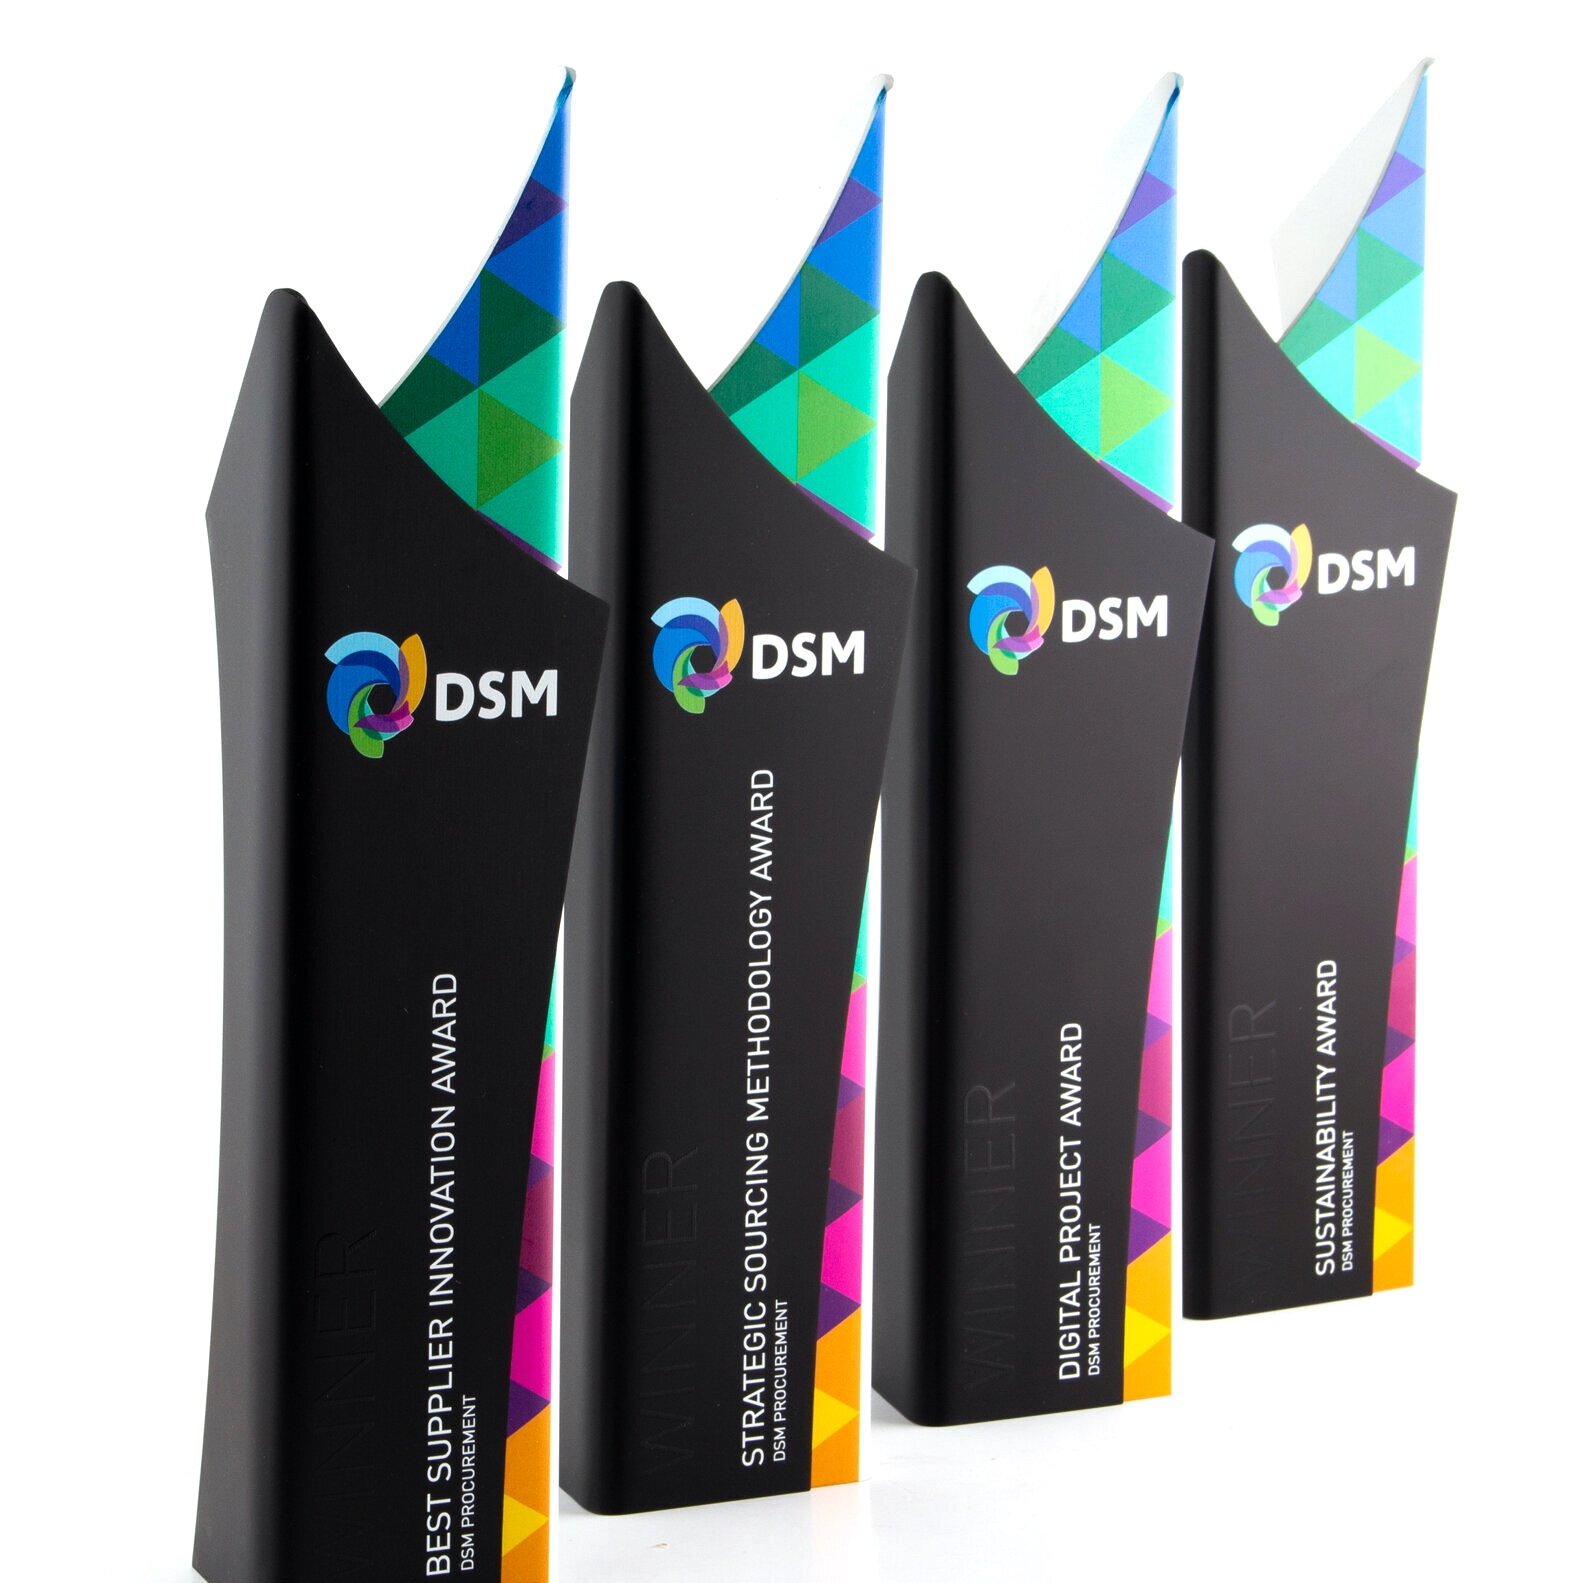 DSM-best-innovation-supplier-awards-trophies-collaboration